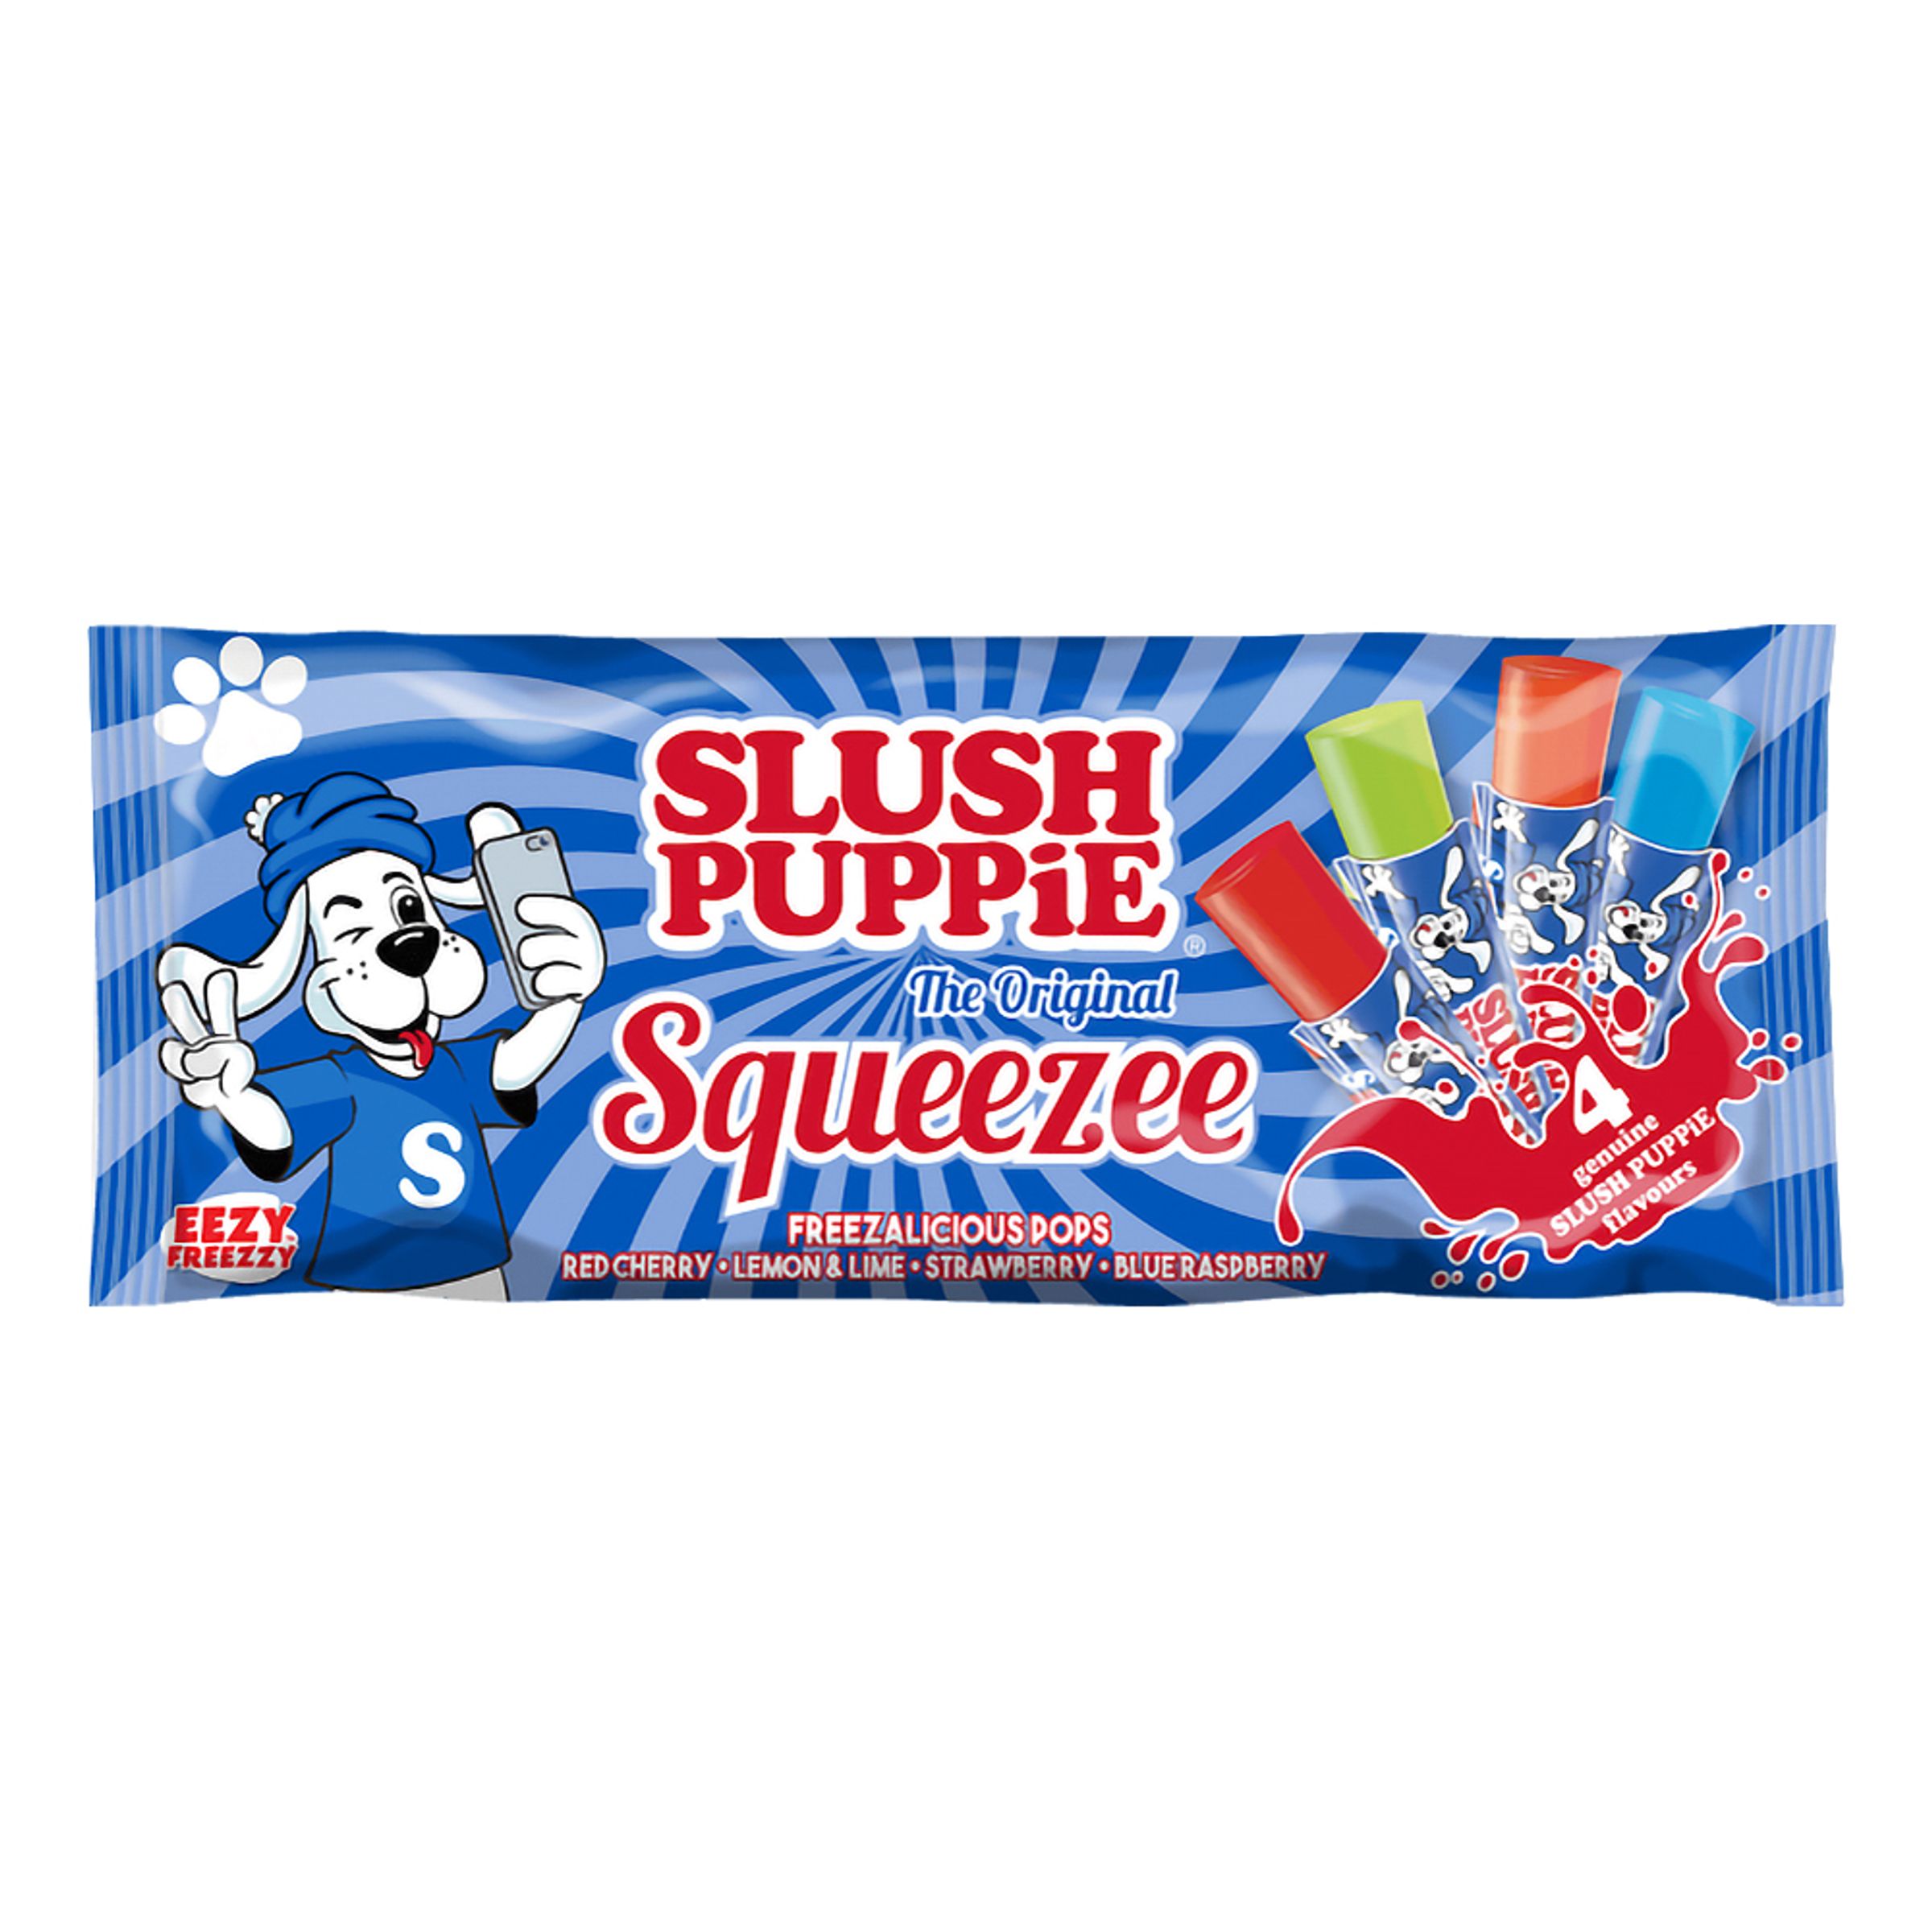 SLUSH PUPPiE Squeezee Freeze Pops - 10-pack